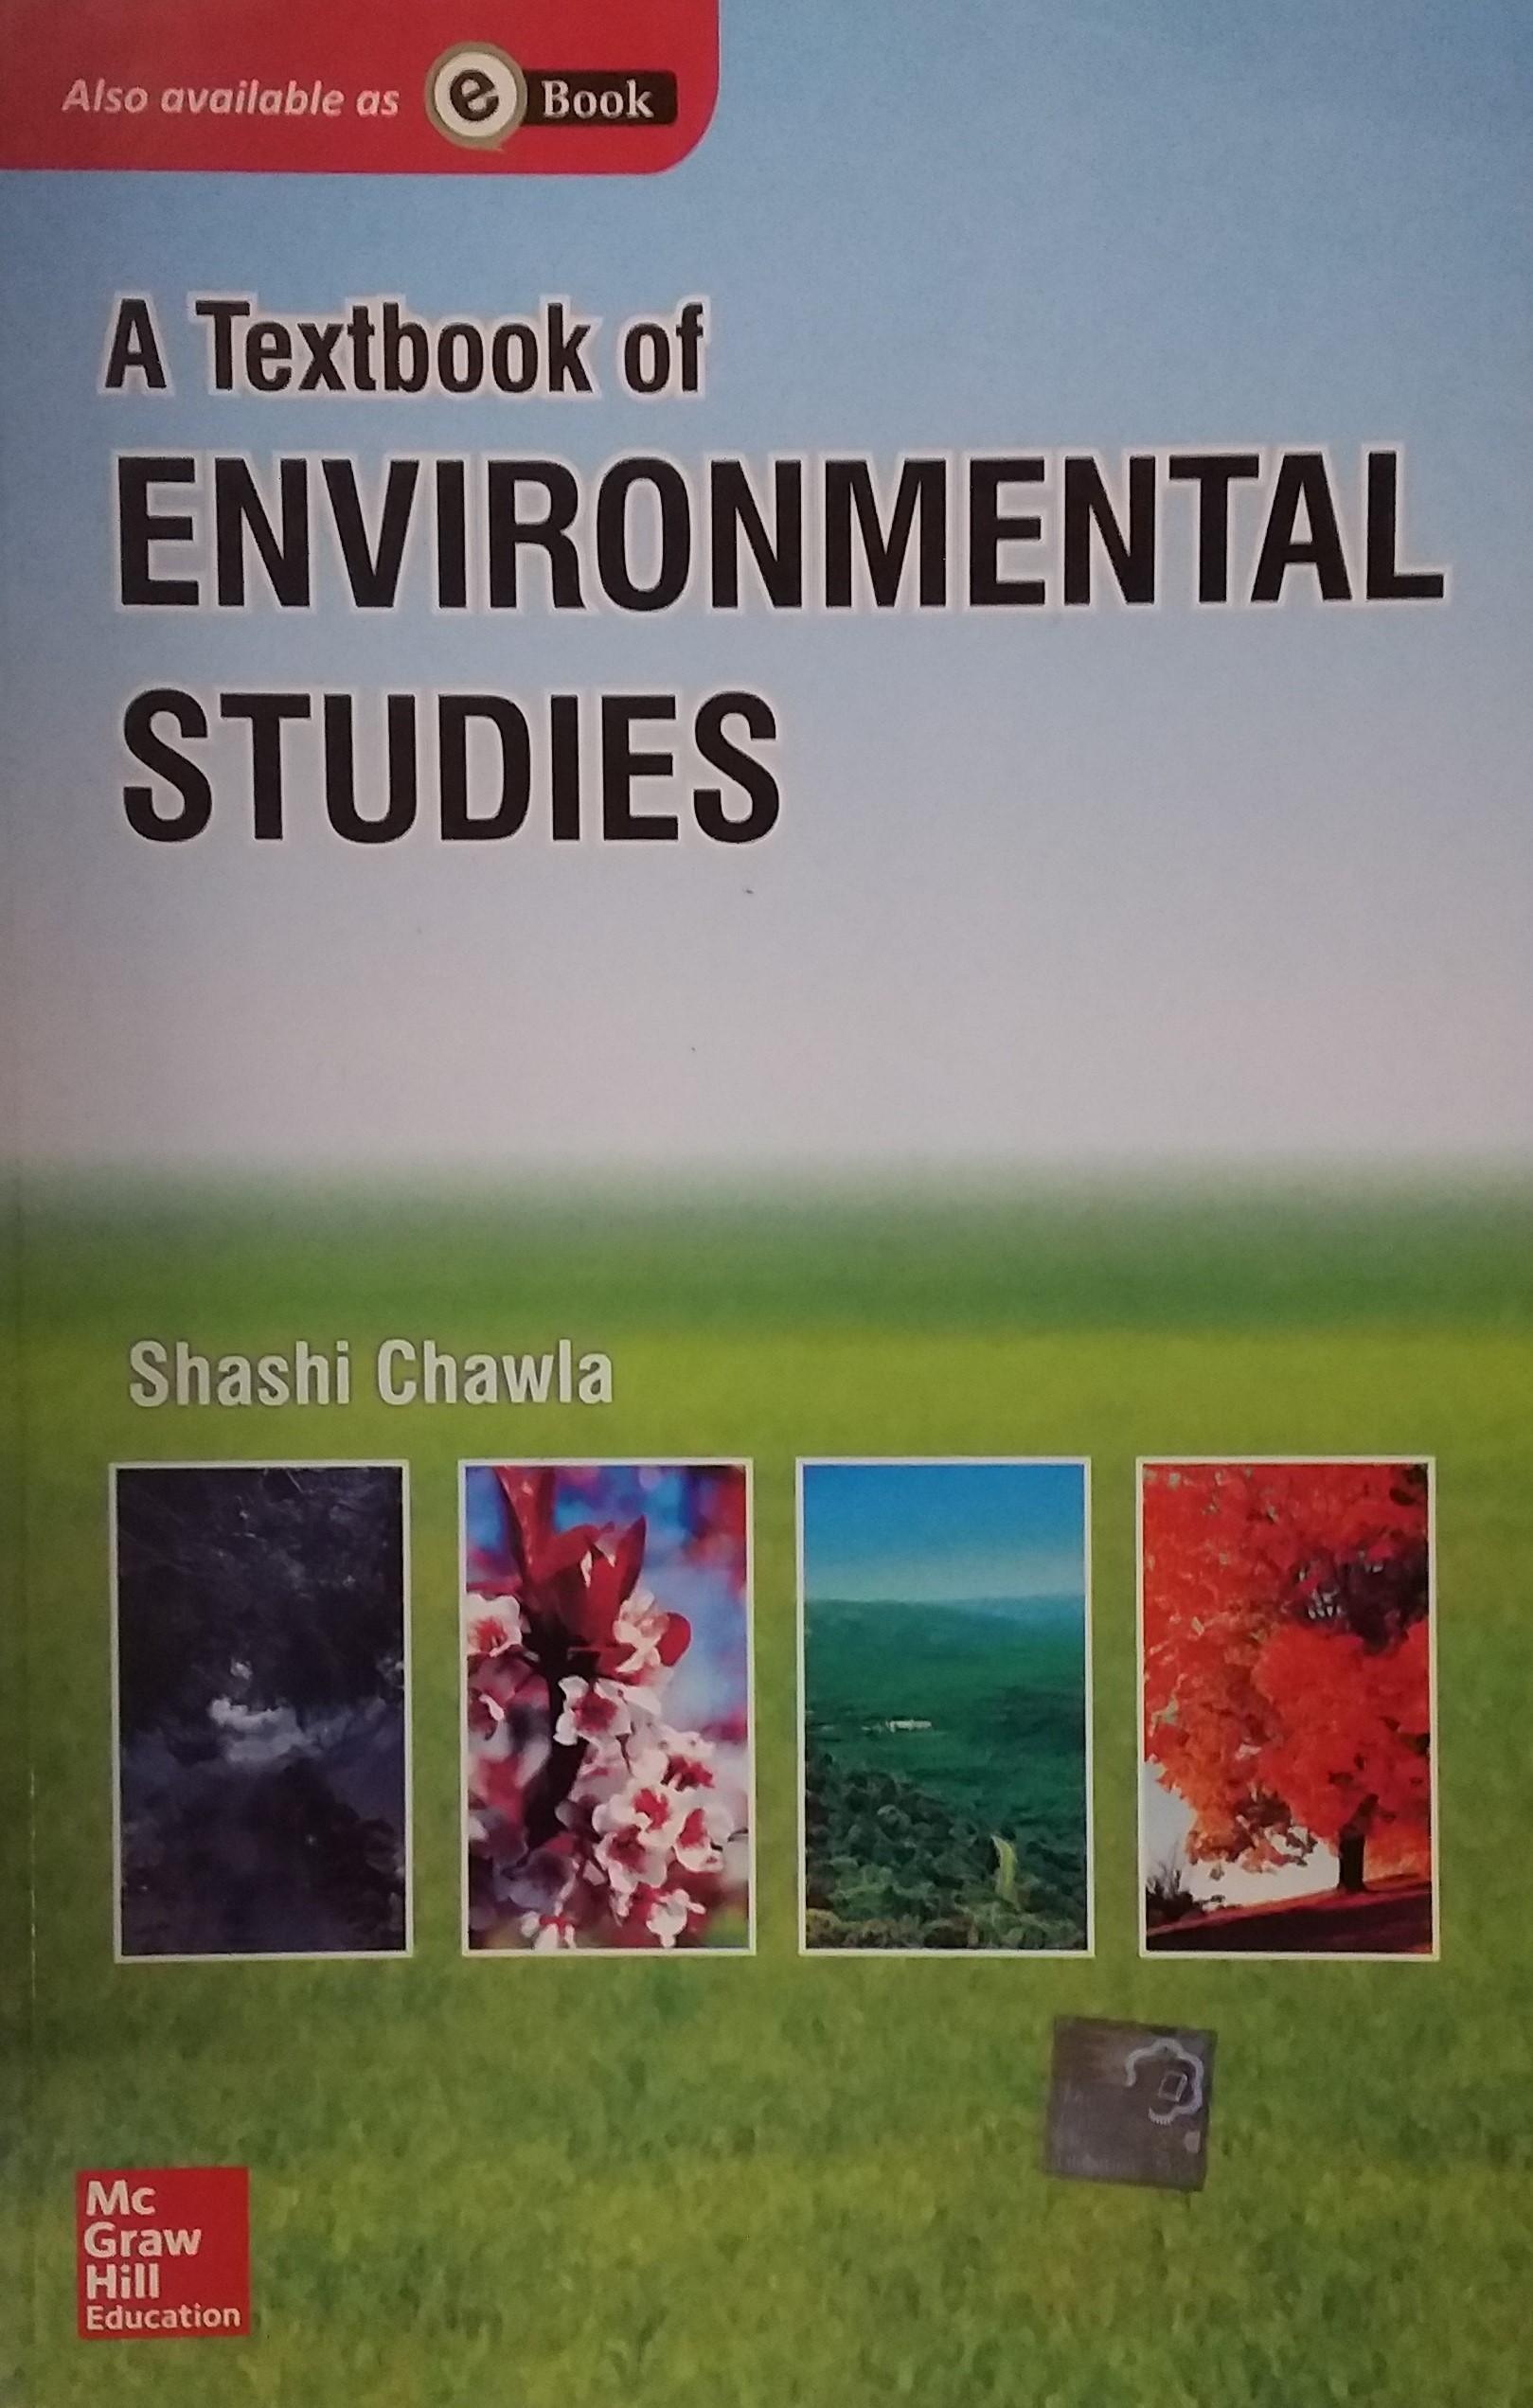 a textbook of environmental studies by shashi chawla pdf download